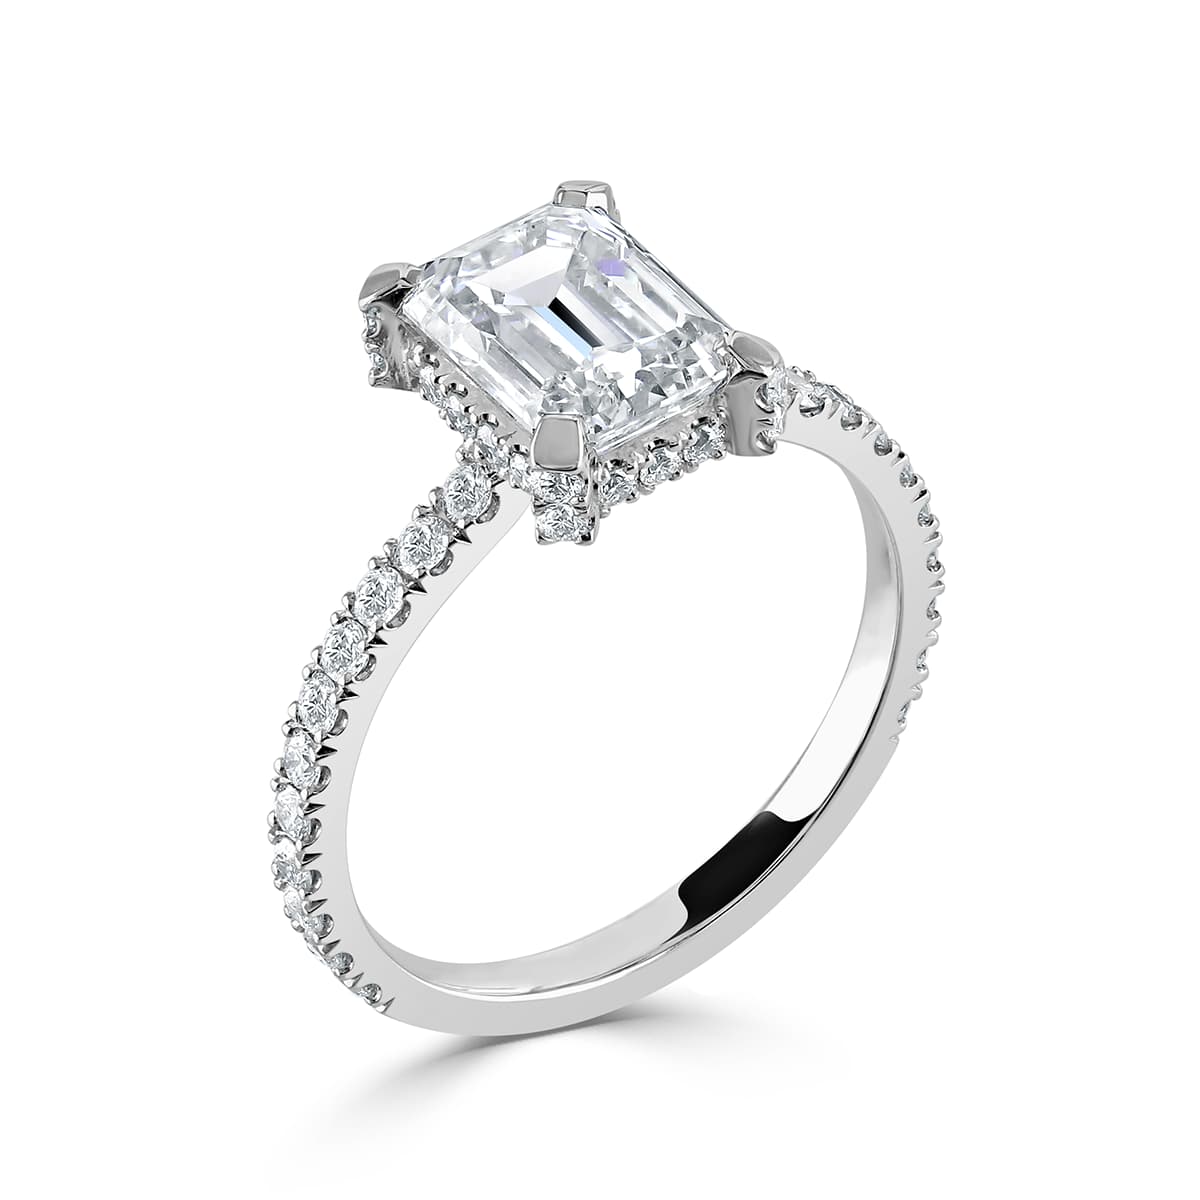 DMR BRIDAL: New Engagement Rings